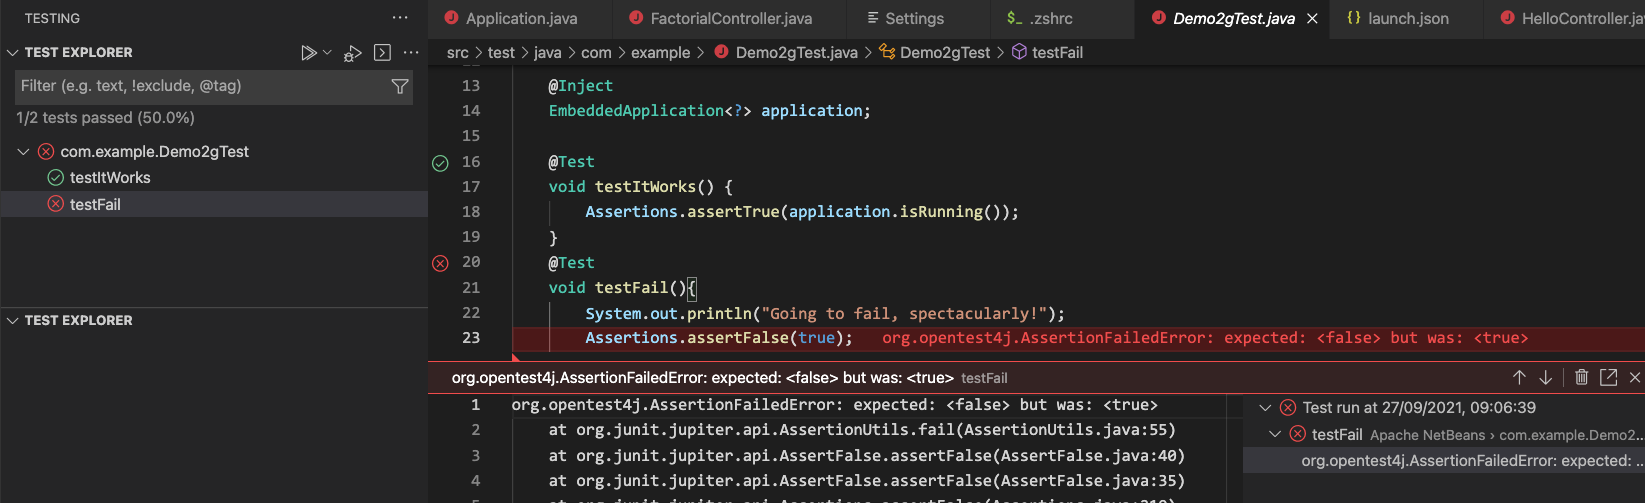 VS Code: Native Test Explorer API